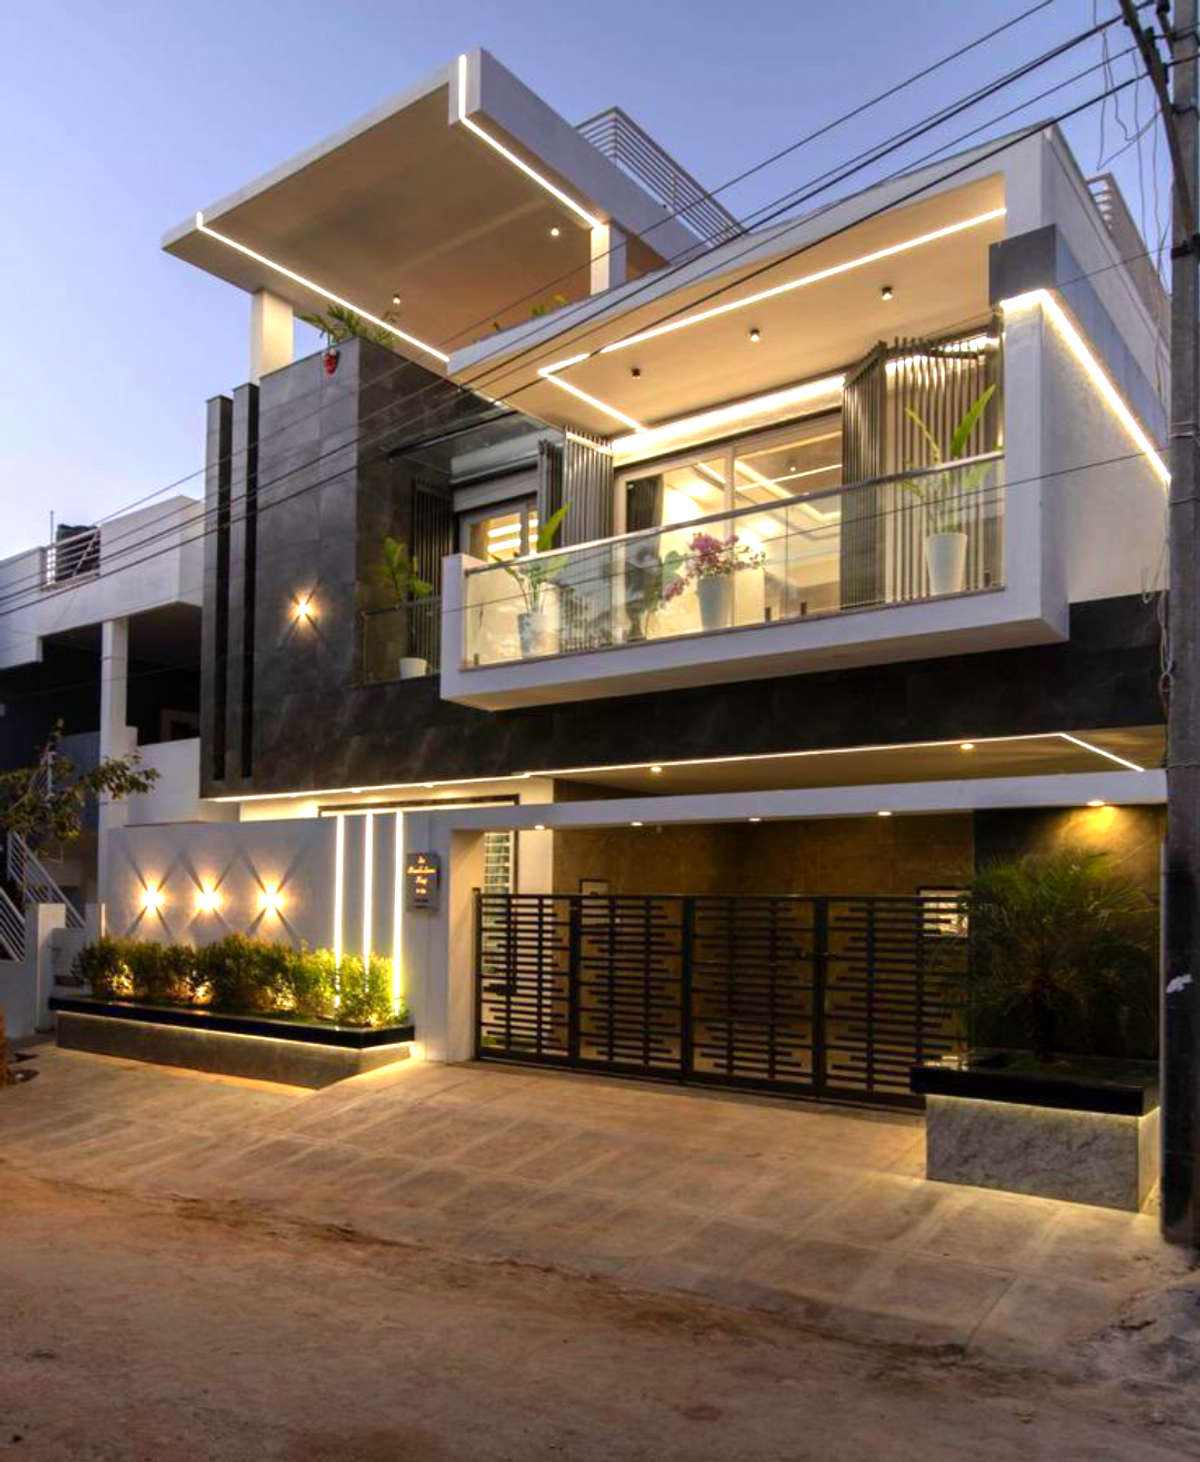 Exterior design // Front elevation ₹₹₹  #sayyedinteriordesigner  #exteriordesigns  #frontelivation